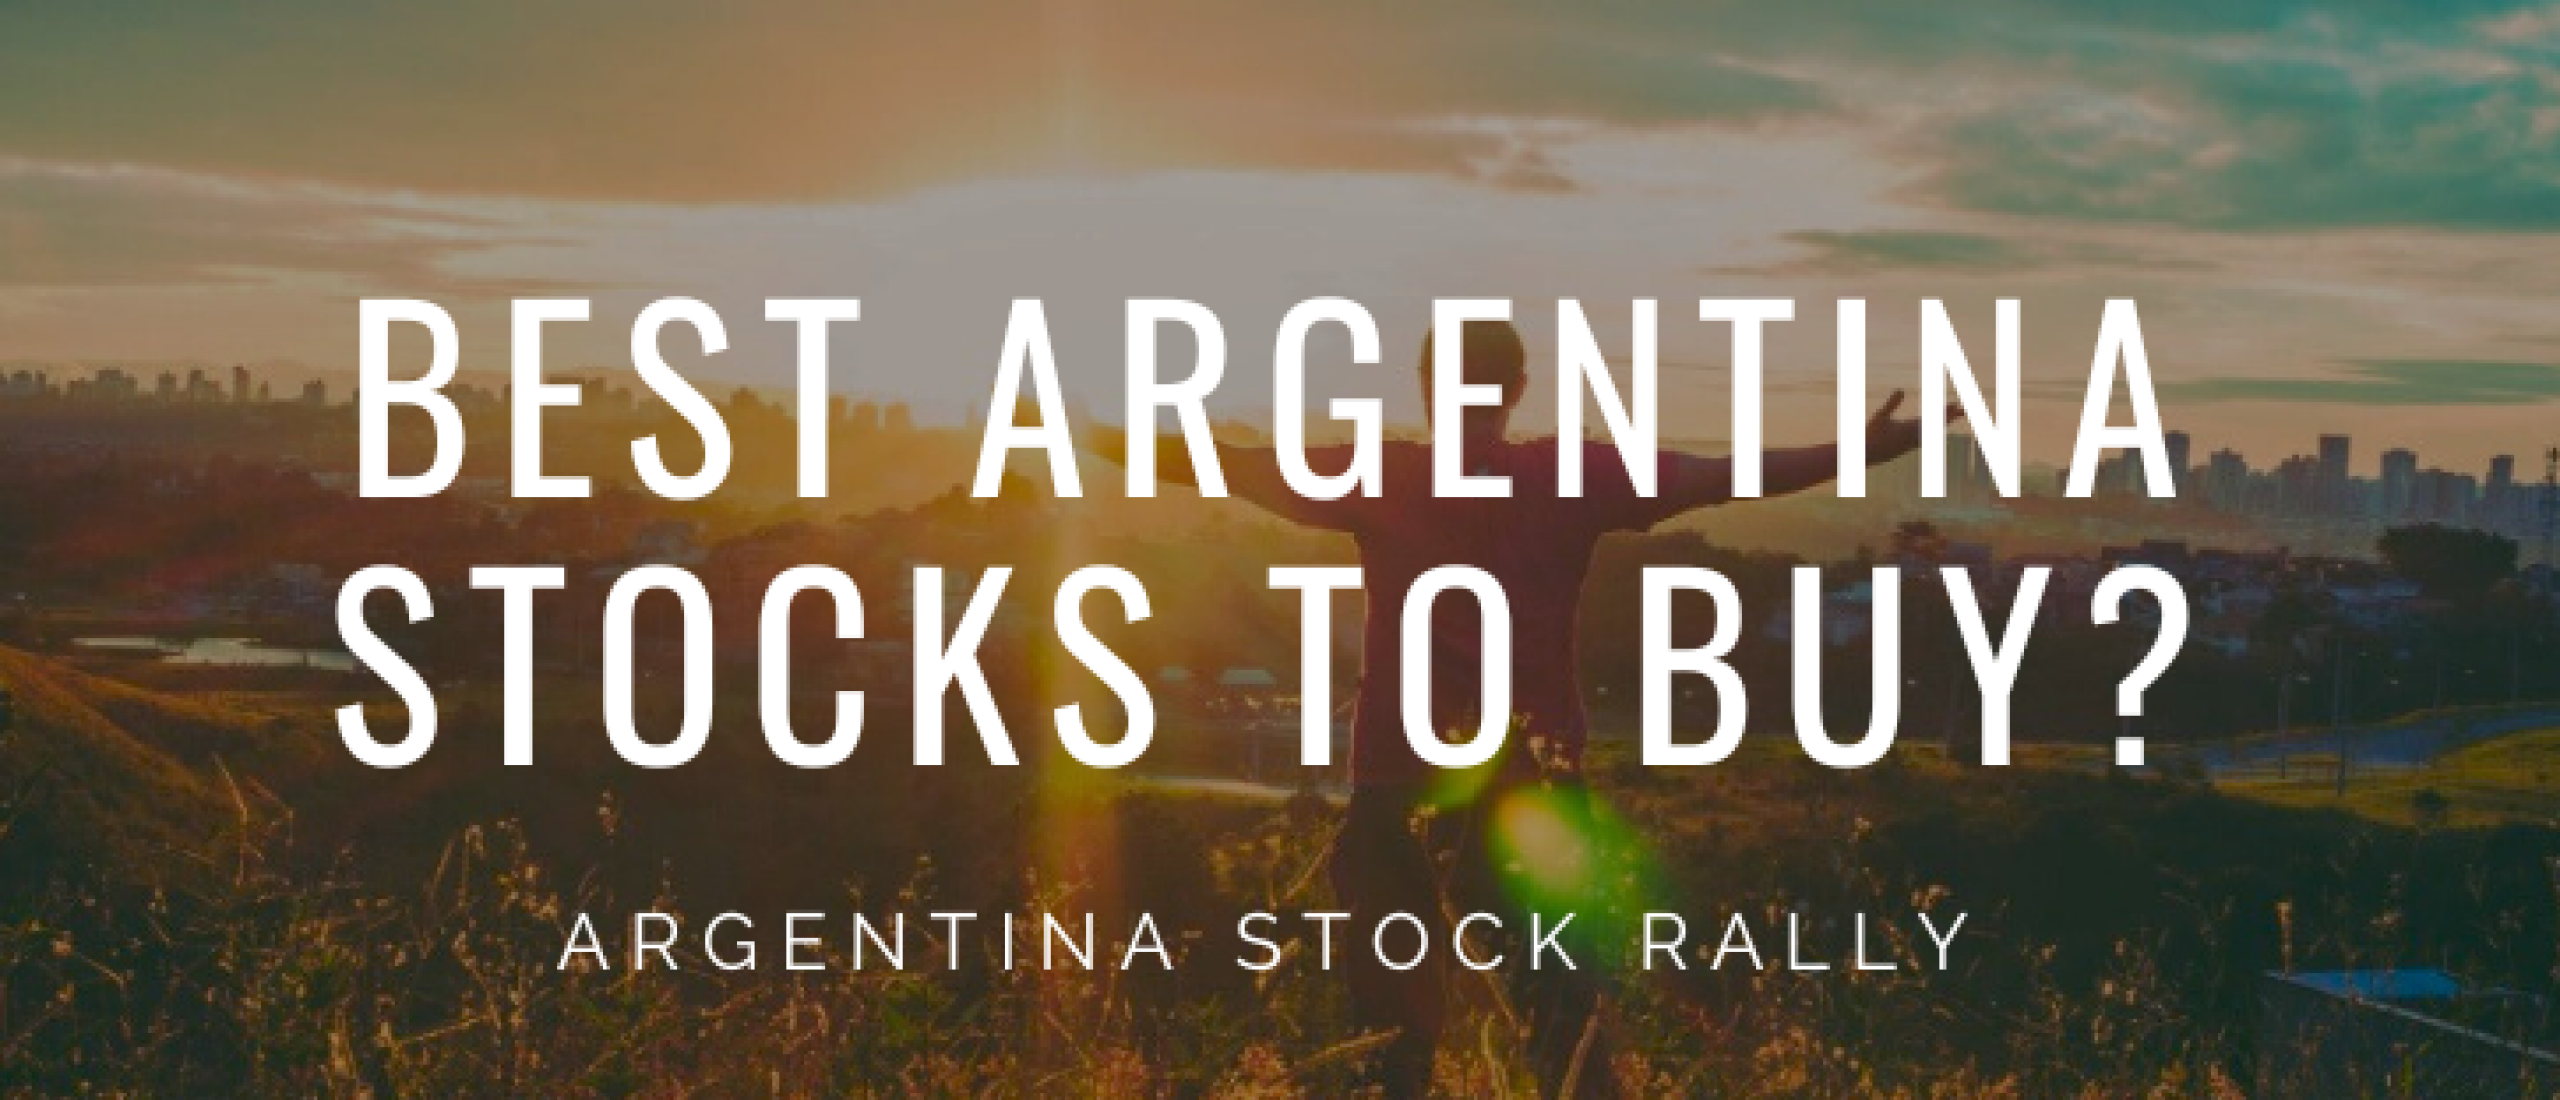 6x Best Argentina Stocks to Buy? Investing in Argentina Stocks